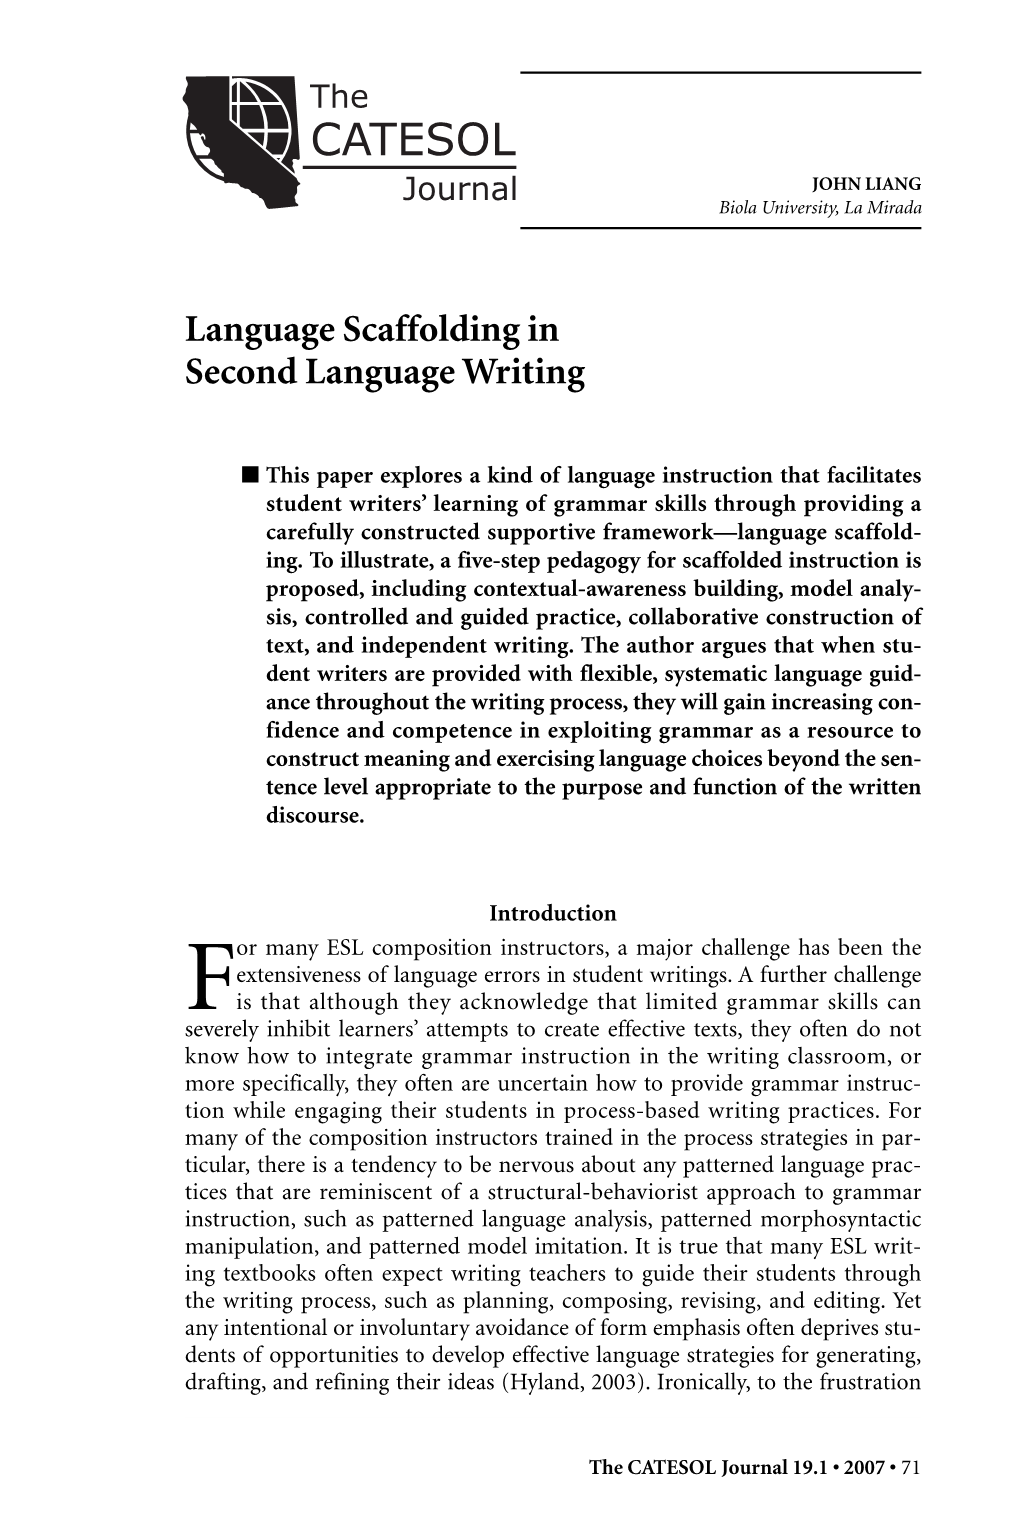 Language Scaffolding in Second Language Writing